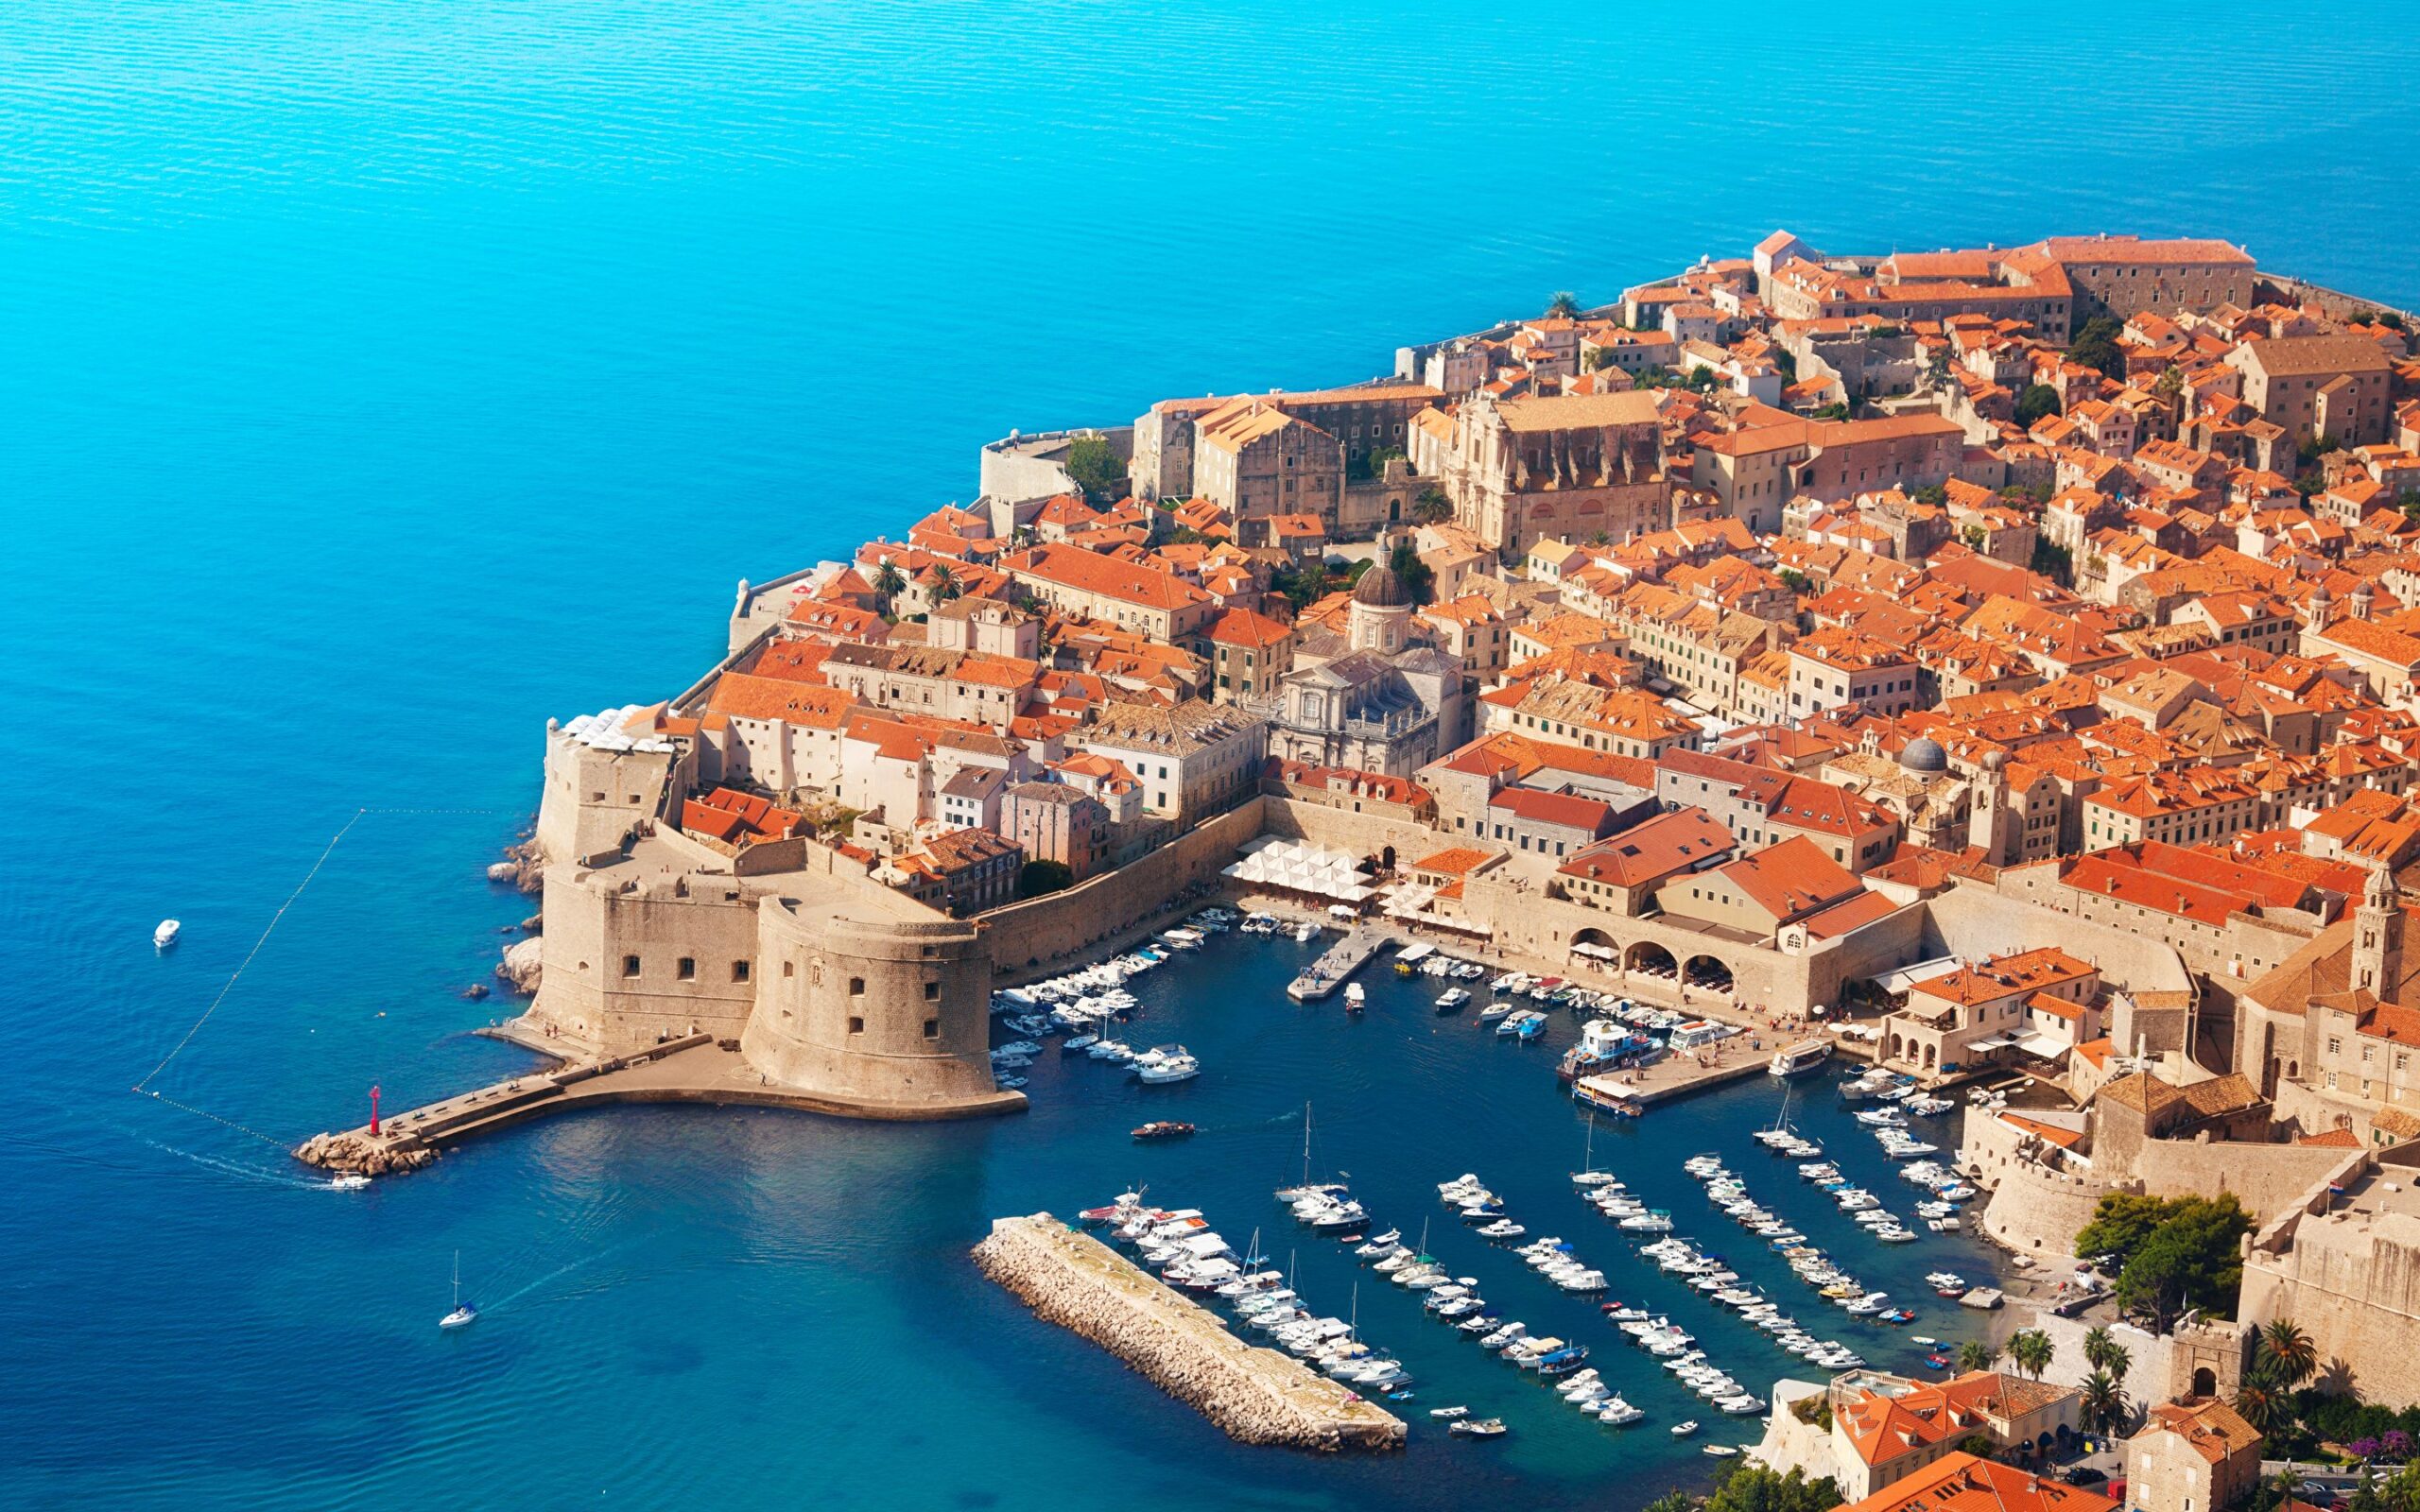 Wallpapers Croatia Dubrovnik Pier Coast powerboat From